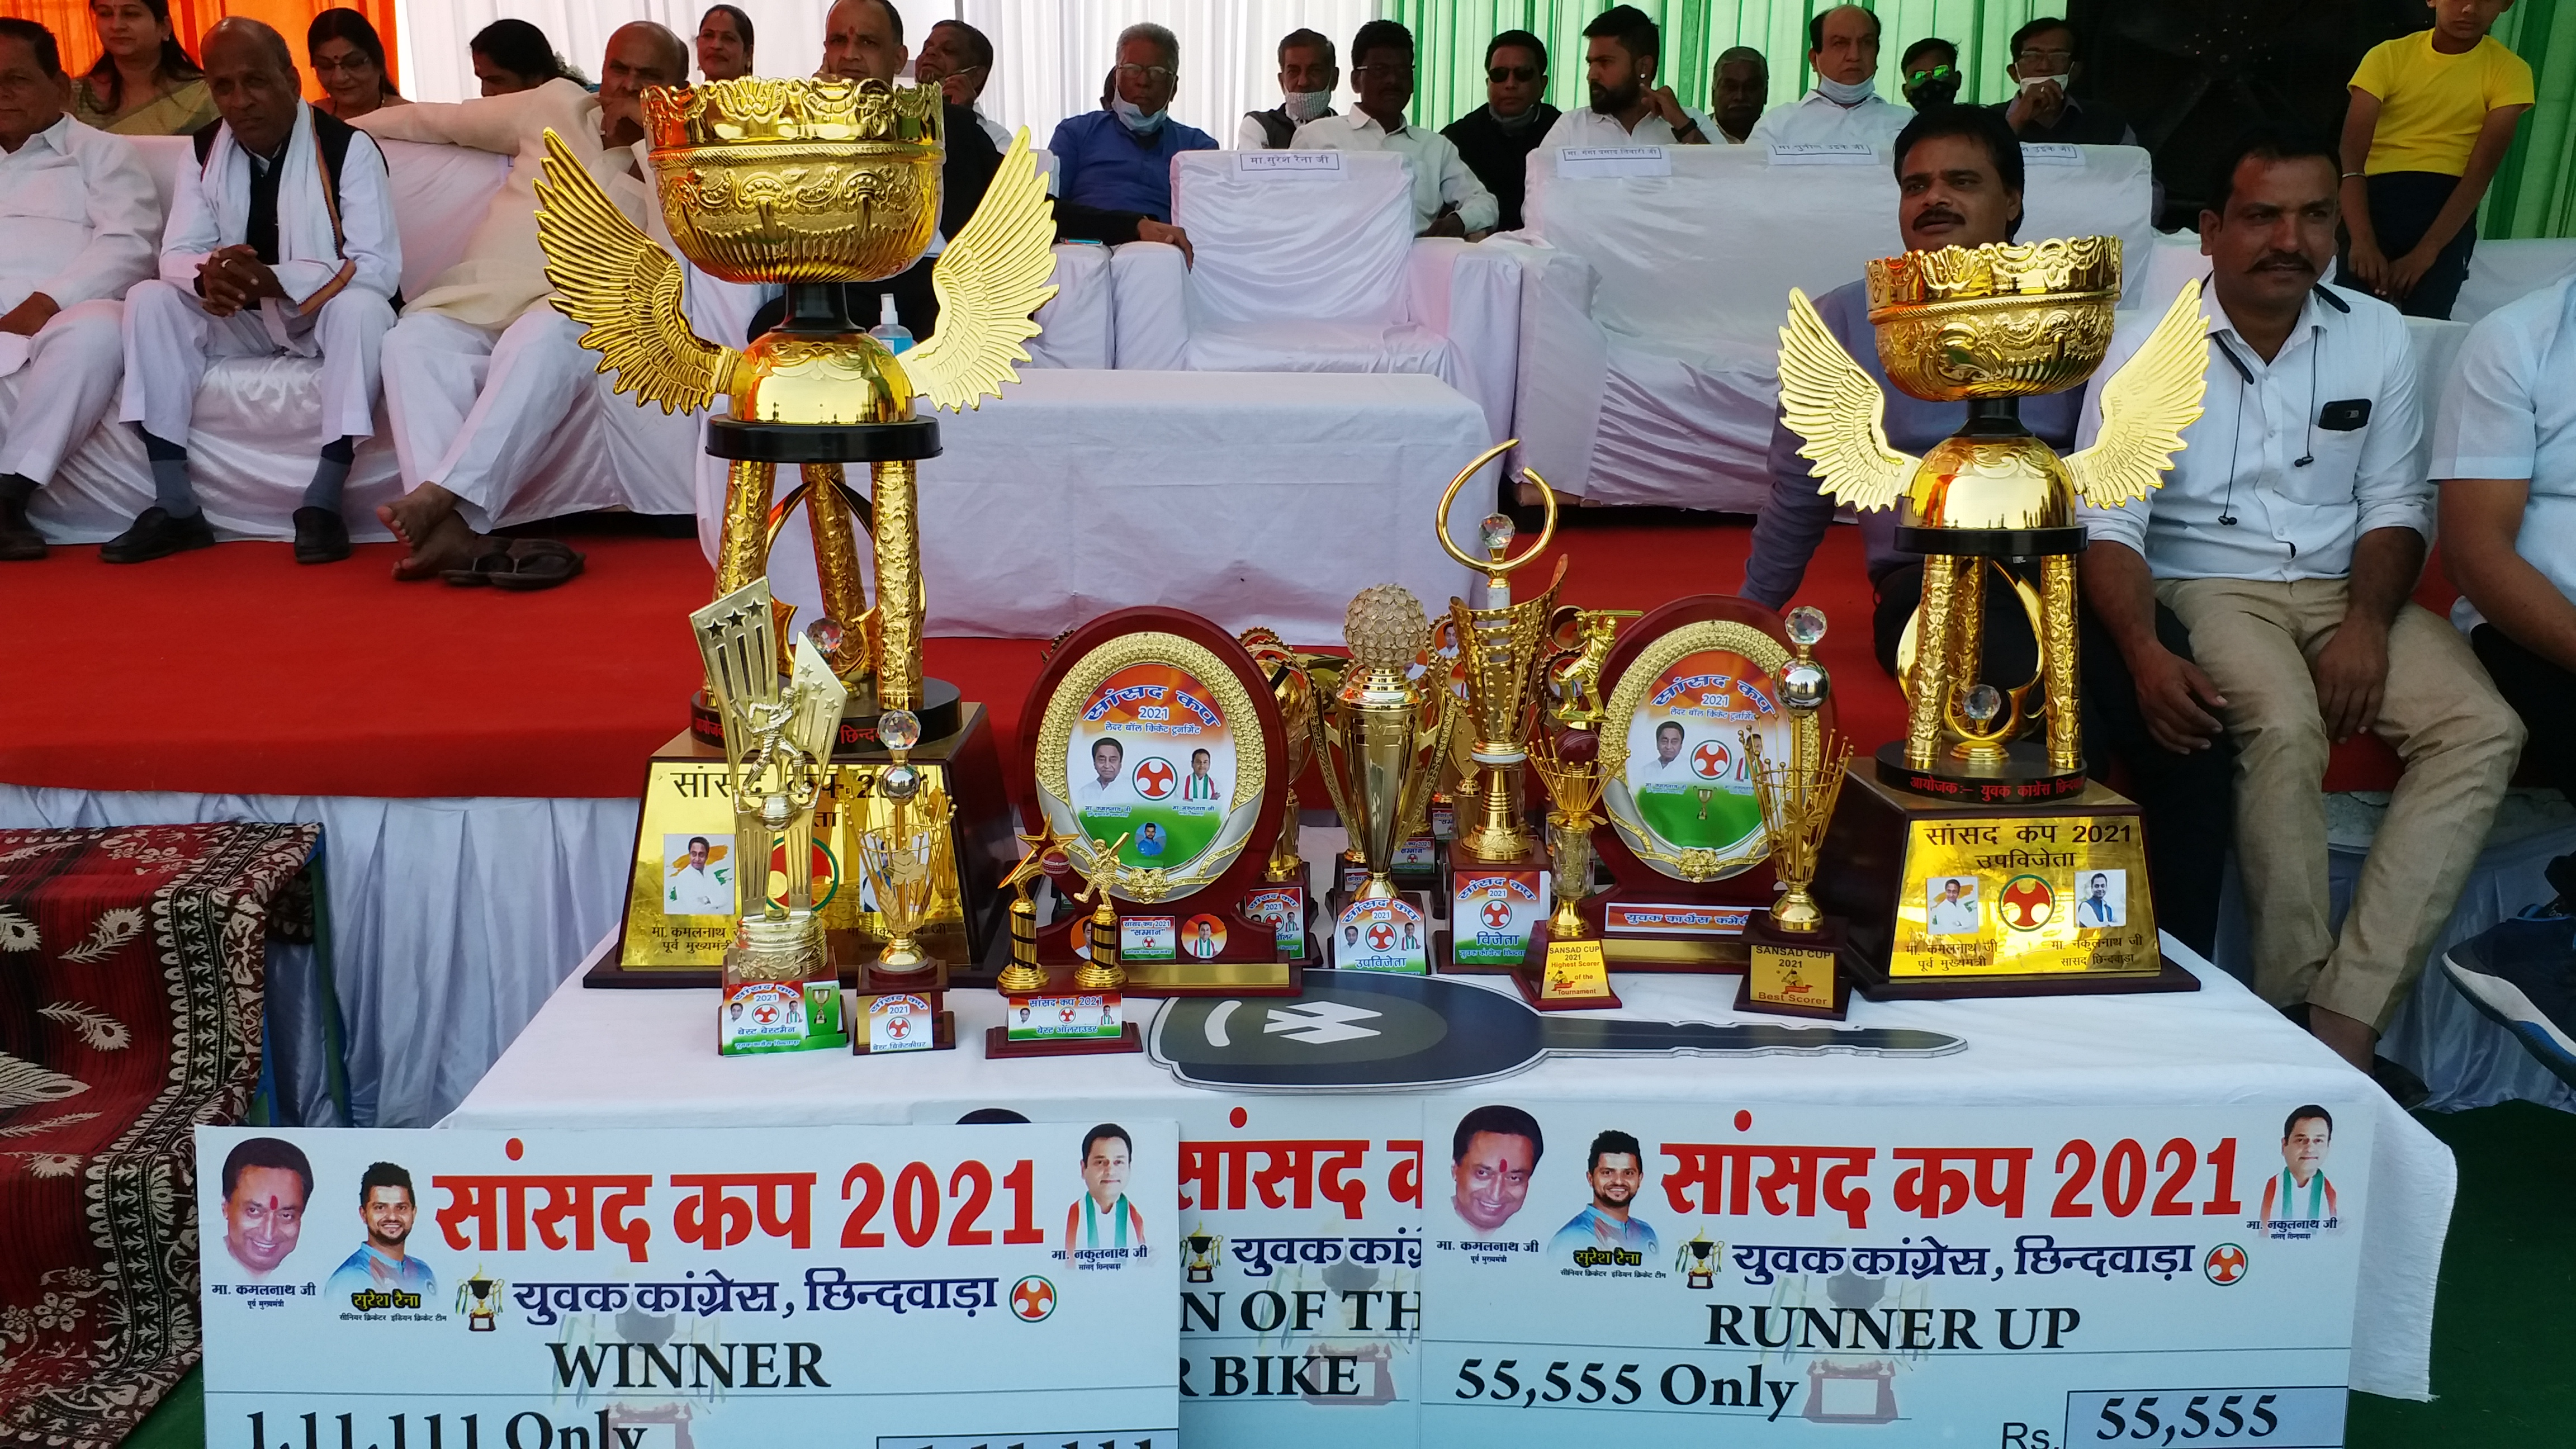 MP Cup Cricket Tournament